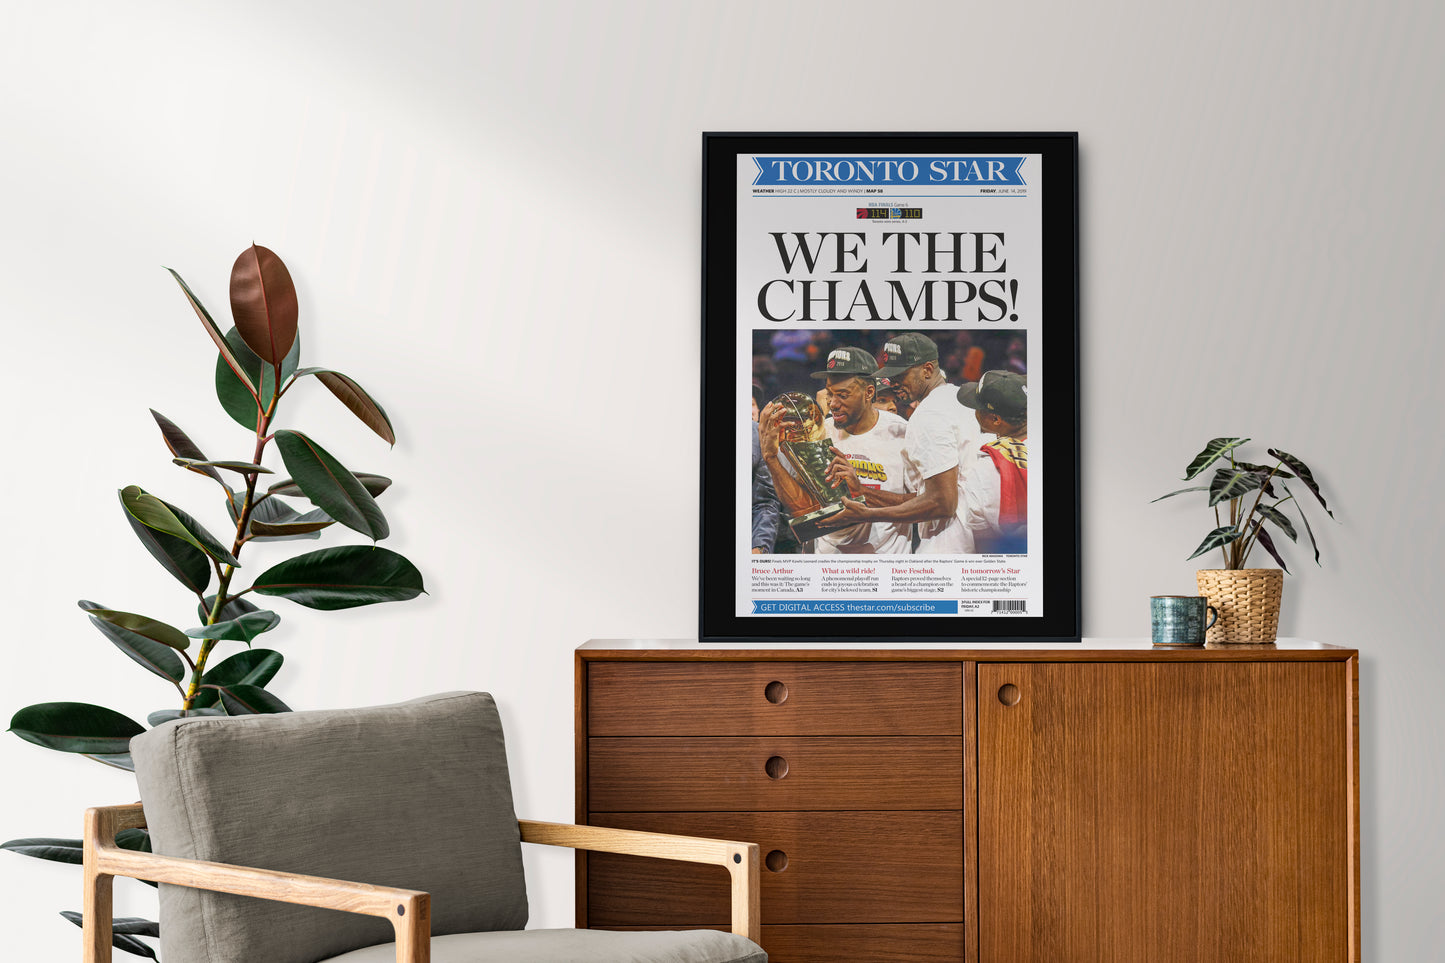 Toronto Raptors 2019 NBA Champions Front Cover Toronto Star Newspaper Poster